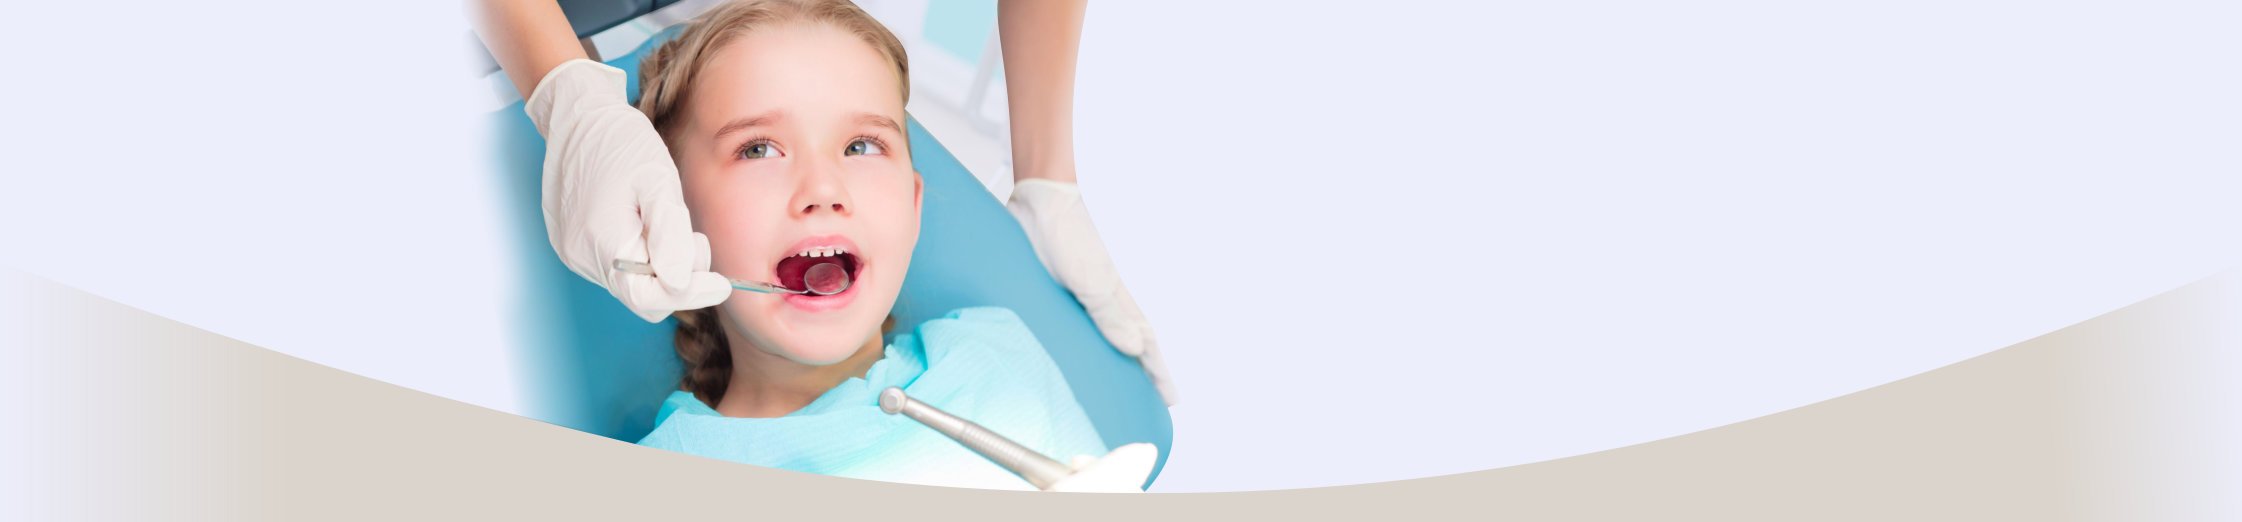 slider-pediatric-dentistry